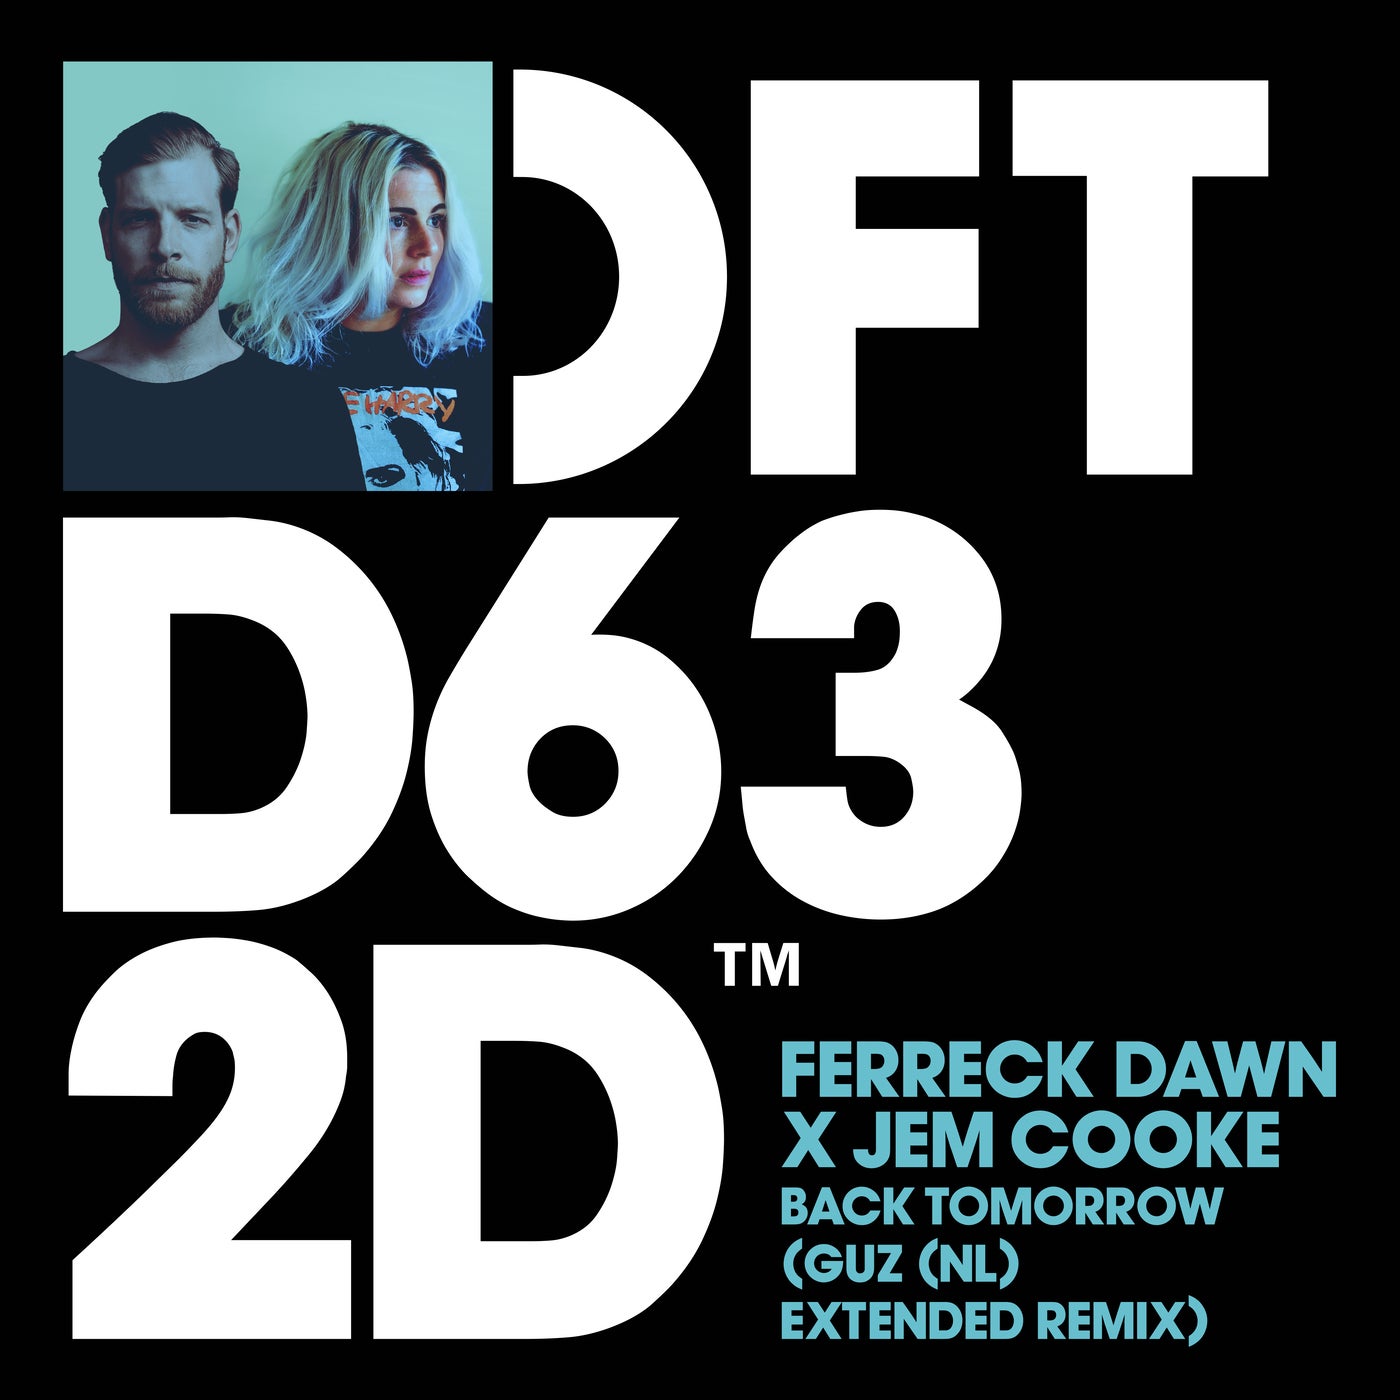 Ferreck Dawn x Jem Cooke - Back Tomorrow (GUZ (NL) Extended Remix)